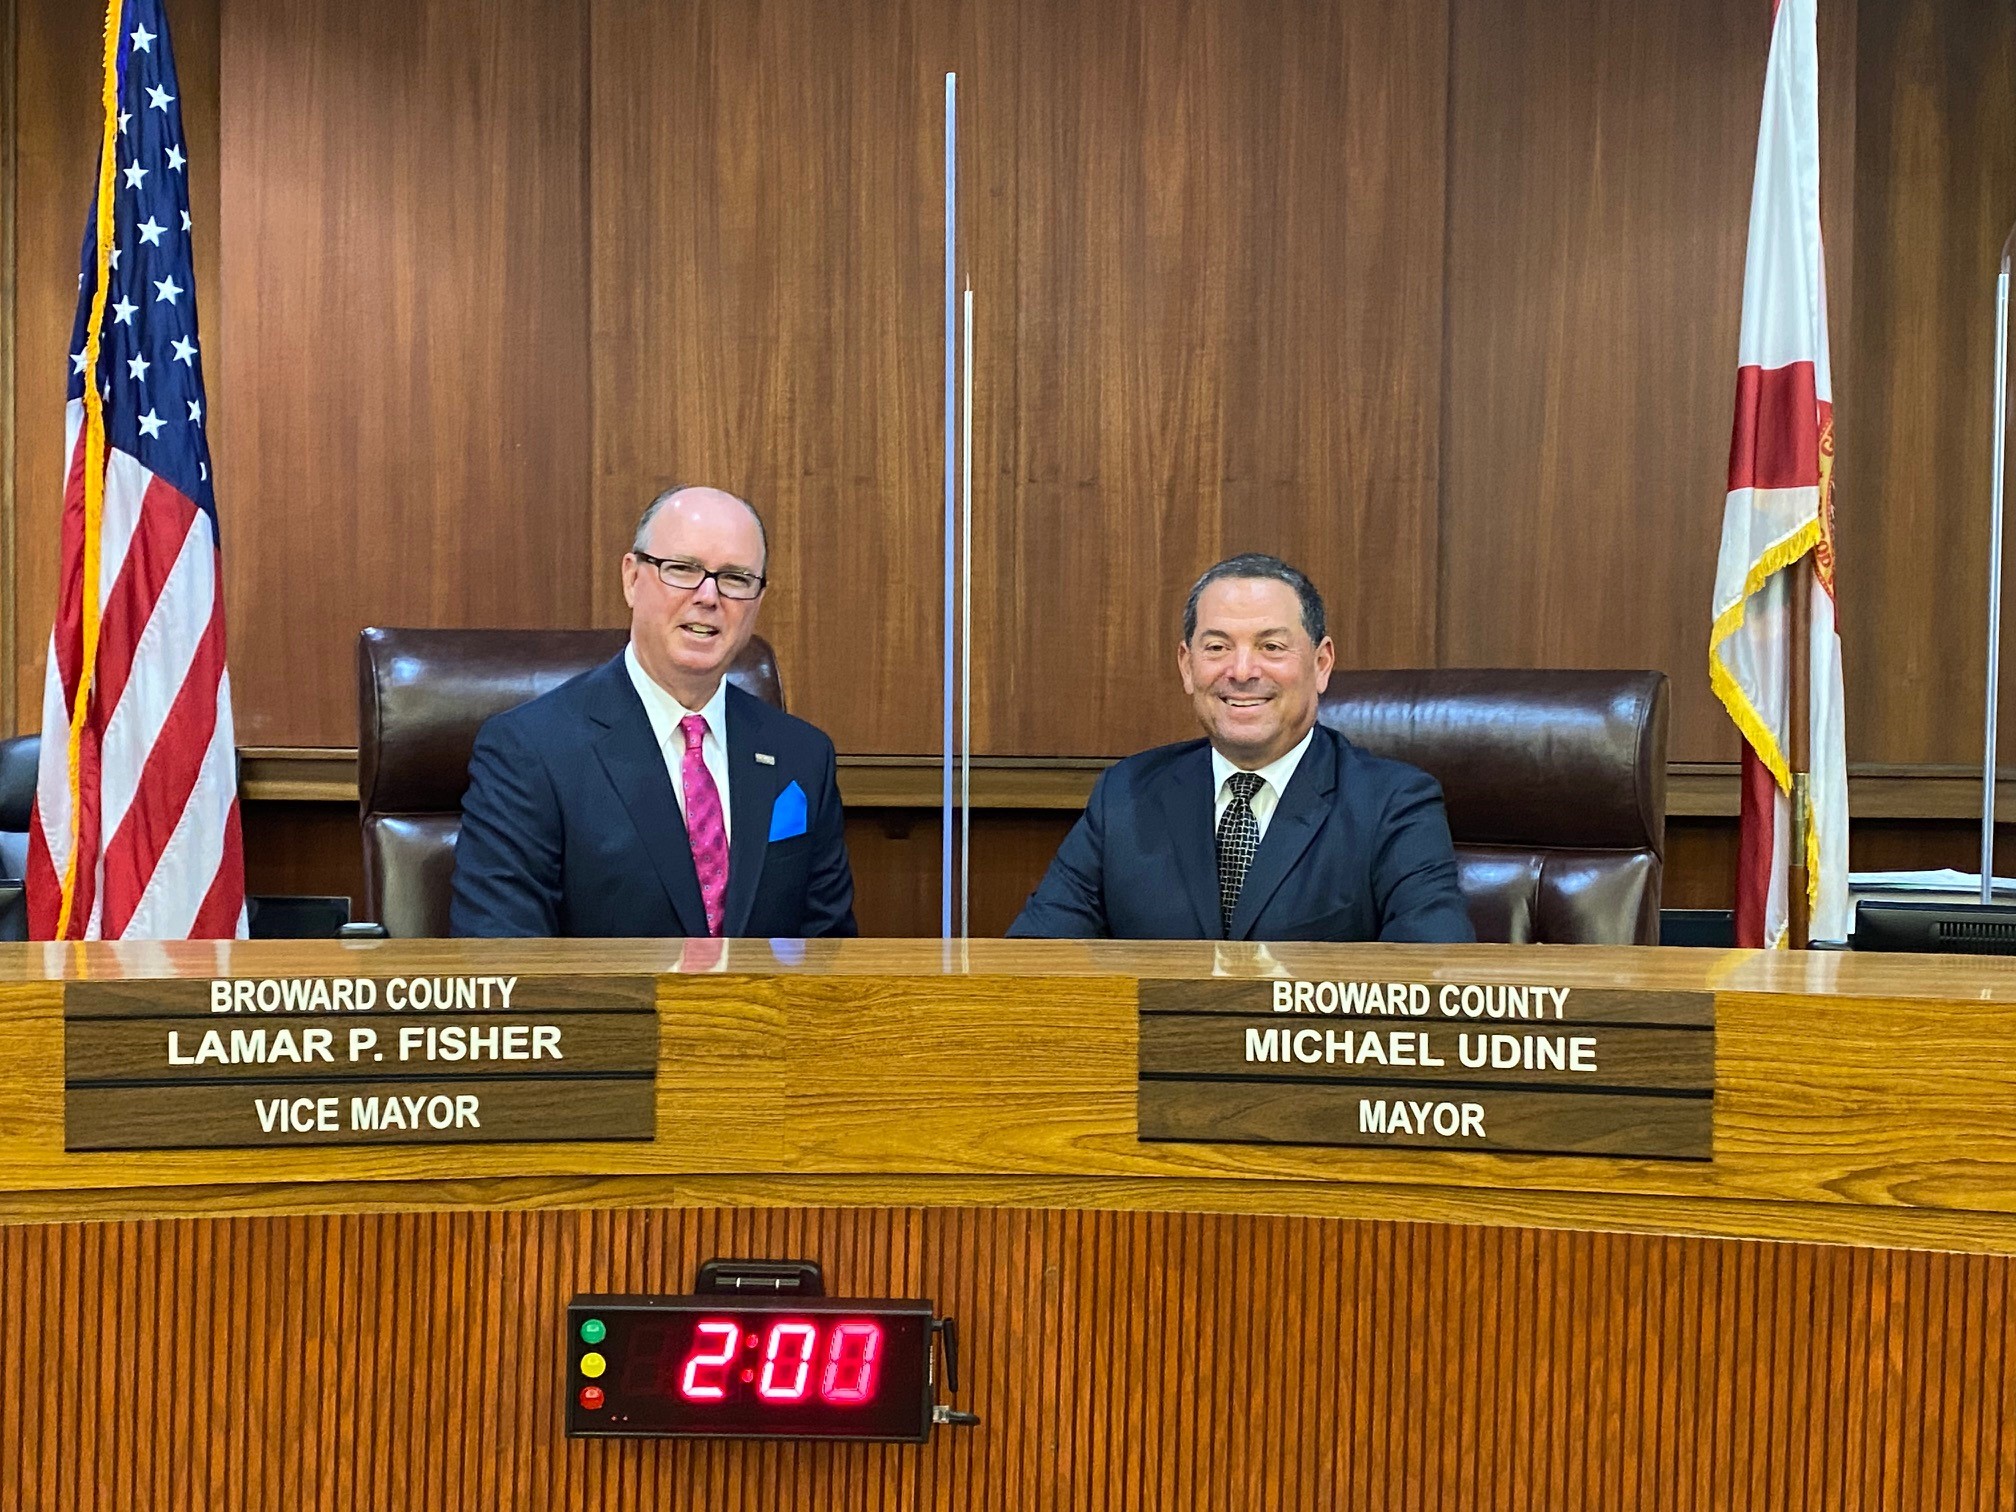 Broward Vice Mayor Lamar P. Fisher (left) and Broward County Mayor Michael Udine (right)